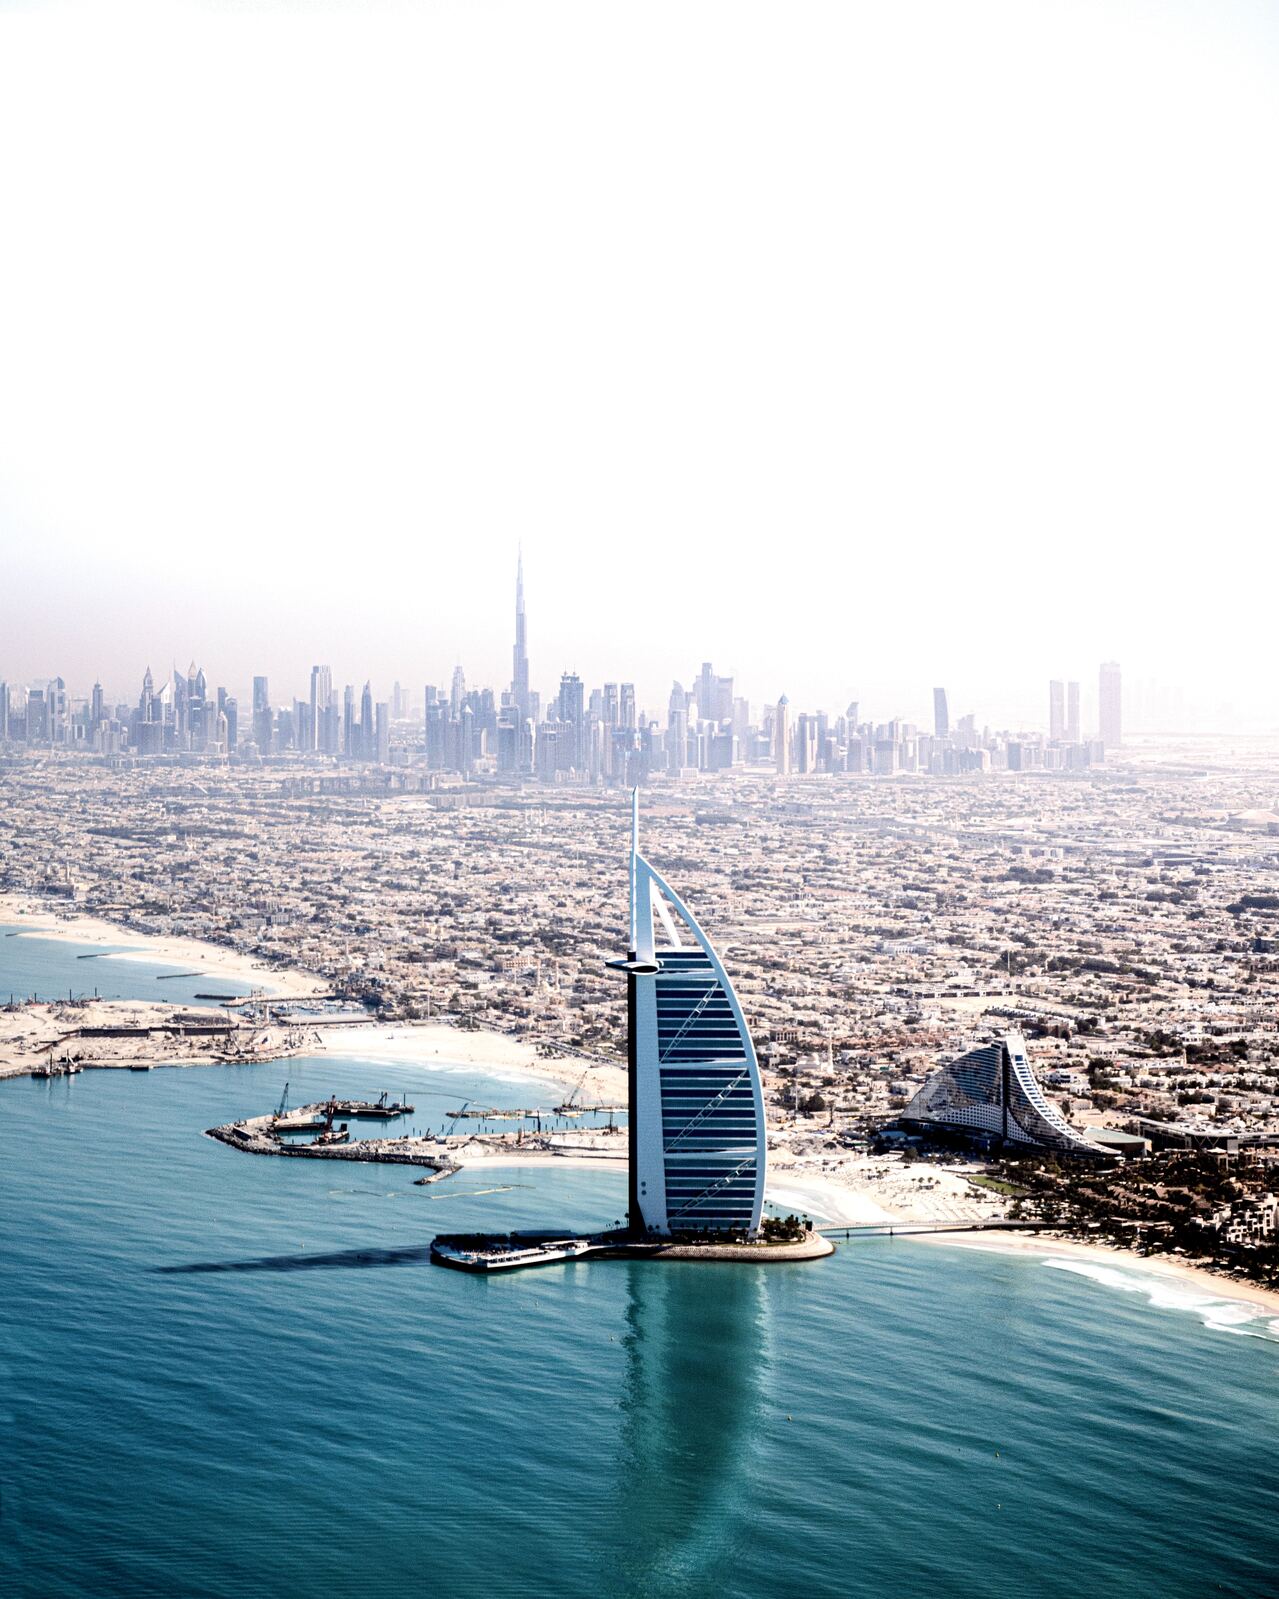 Image of Dubai Helicopter Tour by Team PhotoHound